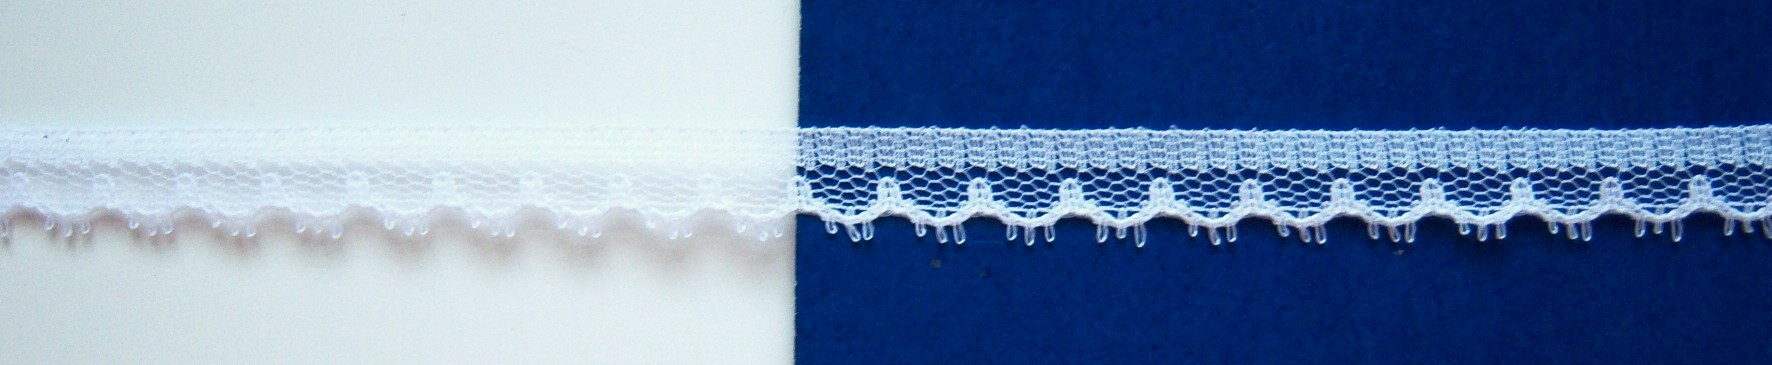 White 3/8" Nylon Lace